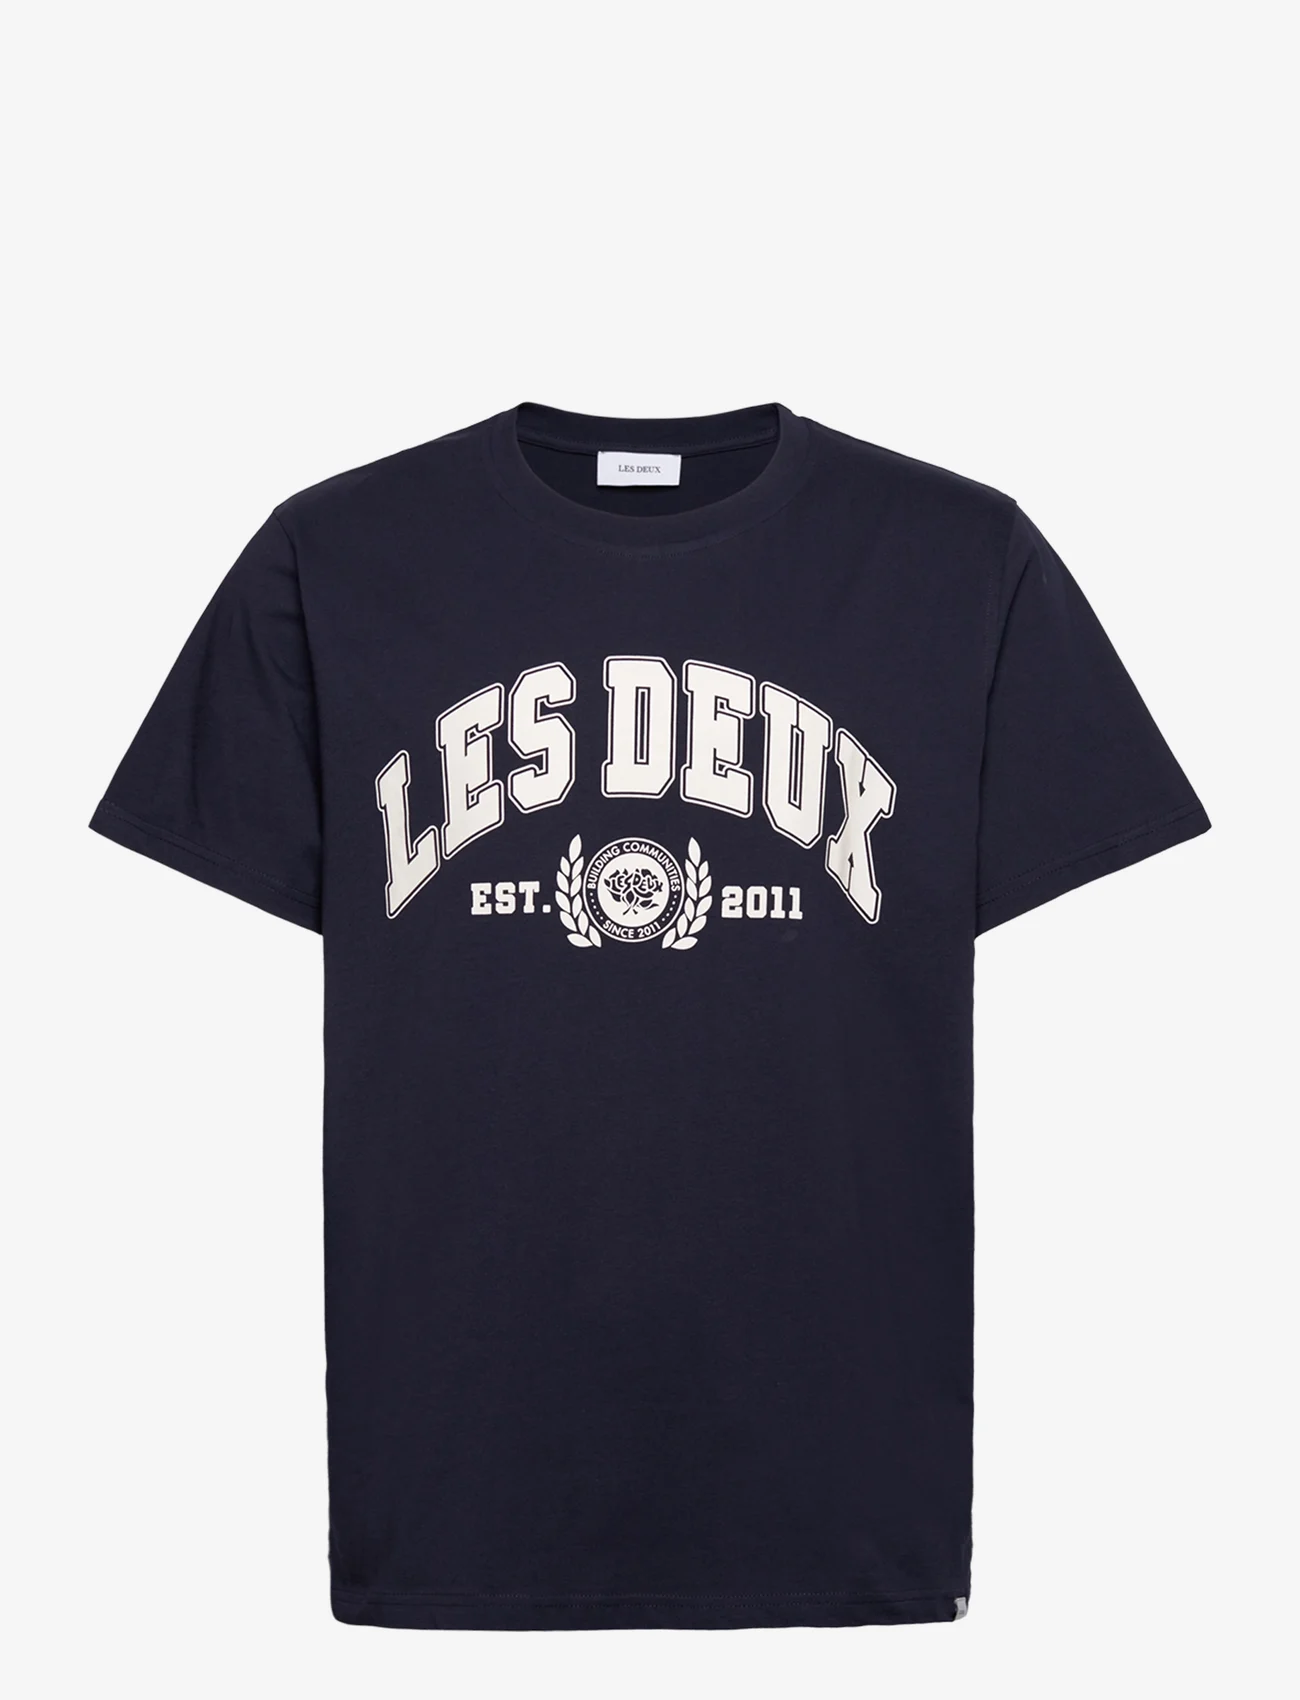 Les Deux - University T-Shirt - nordic style - dark navy/light ivory - 1